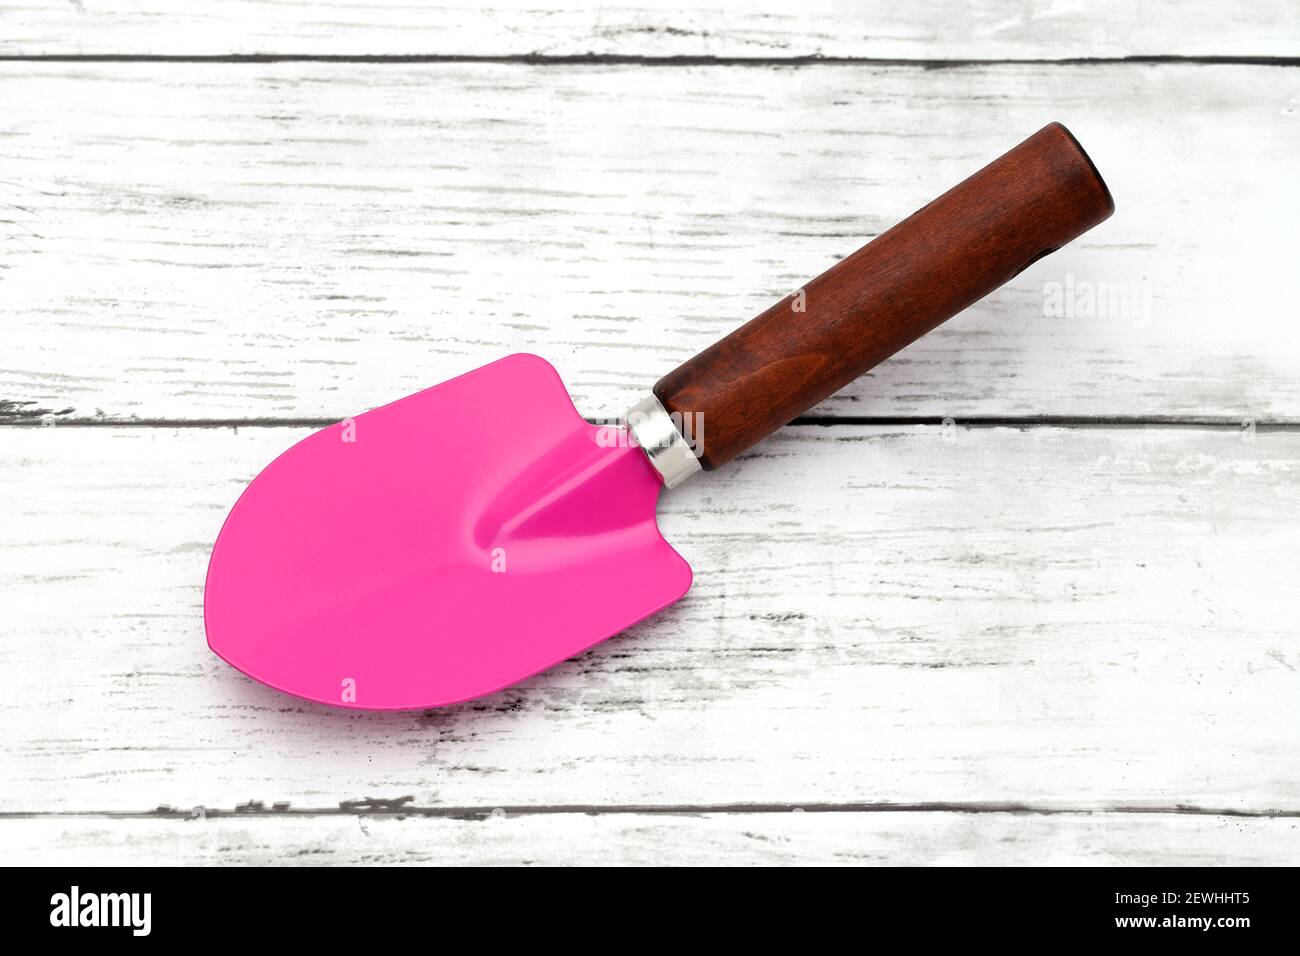 garden tool, a shovel on a wooden grunge white table Stock Photo